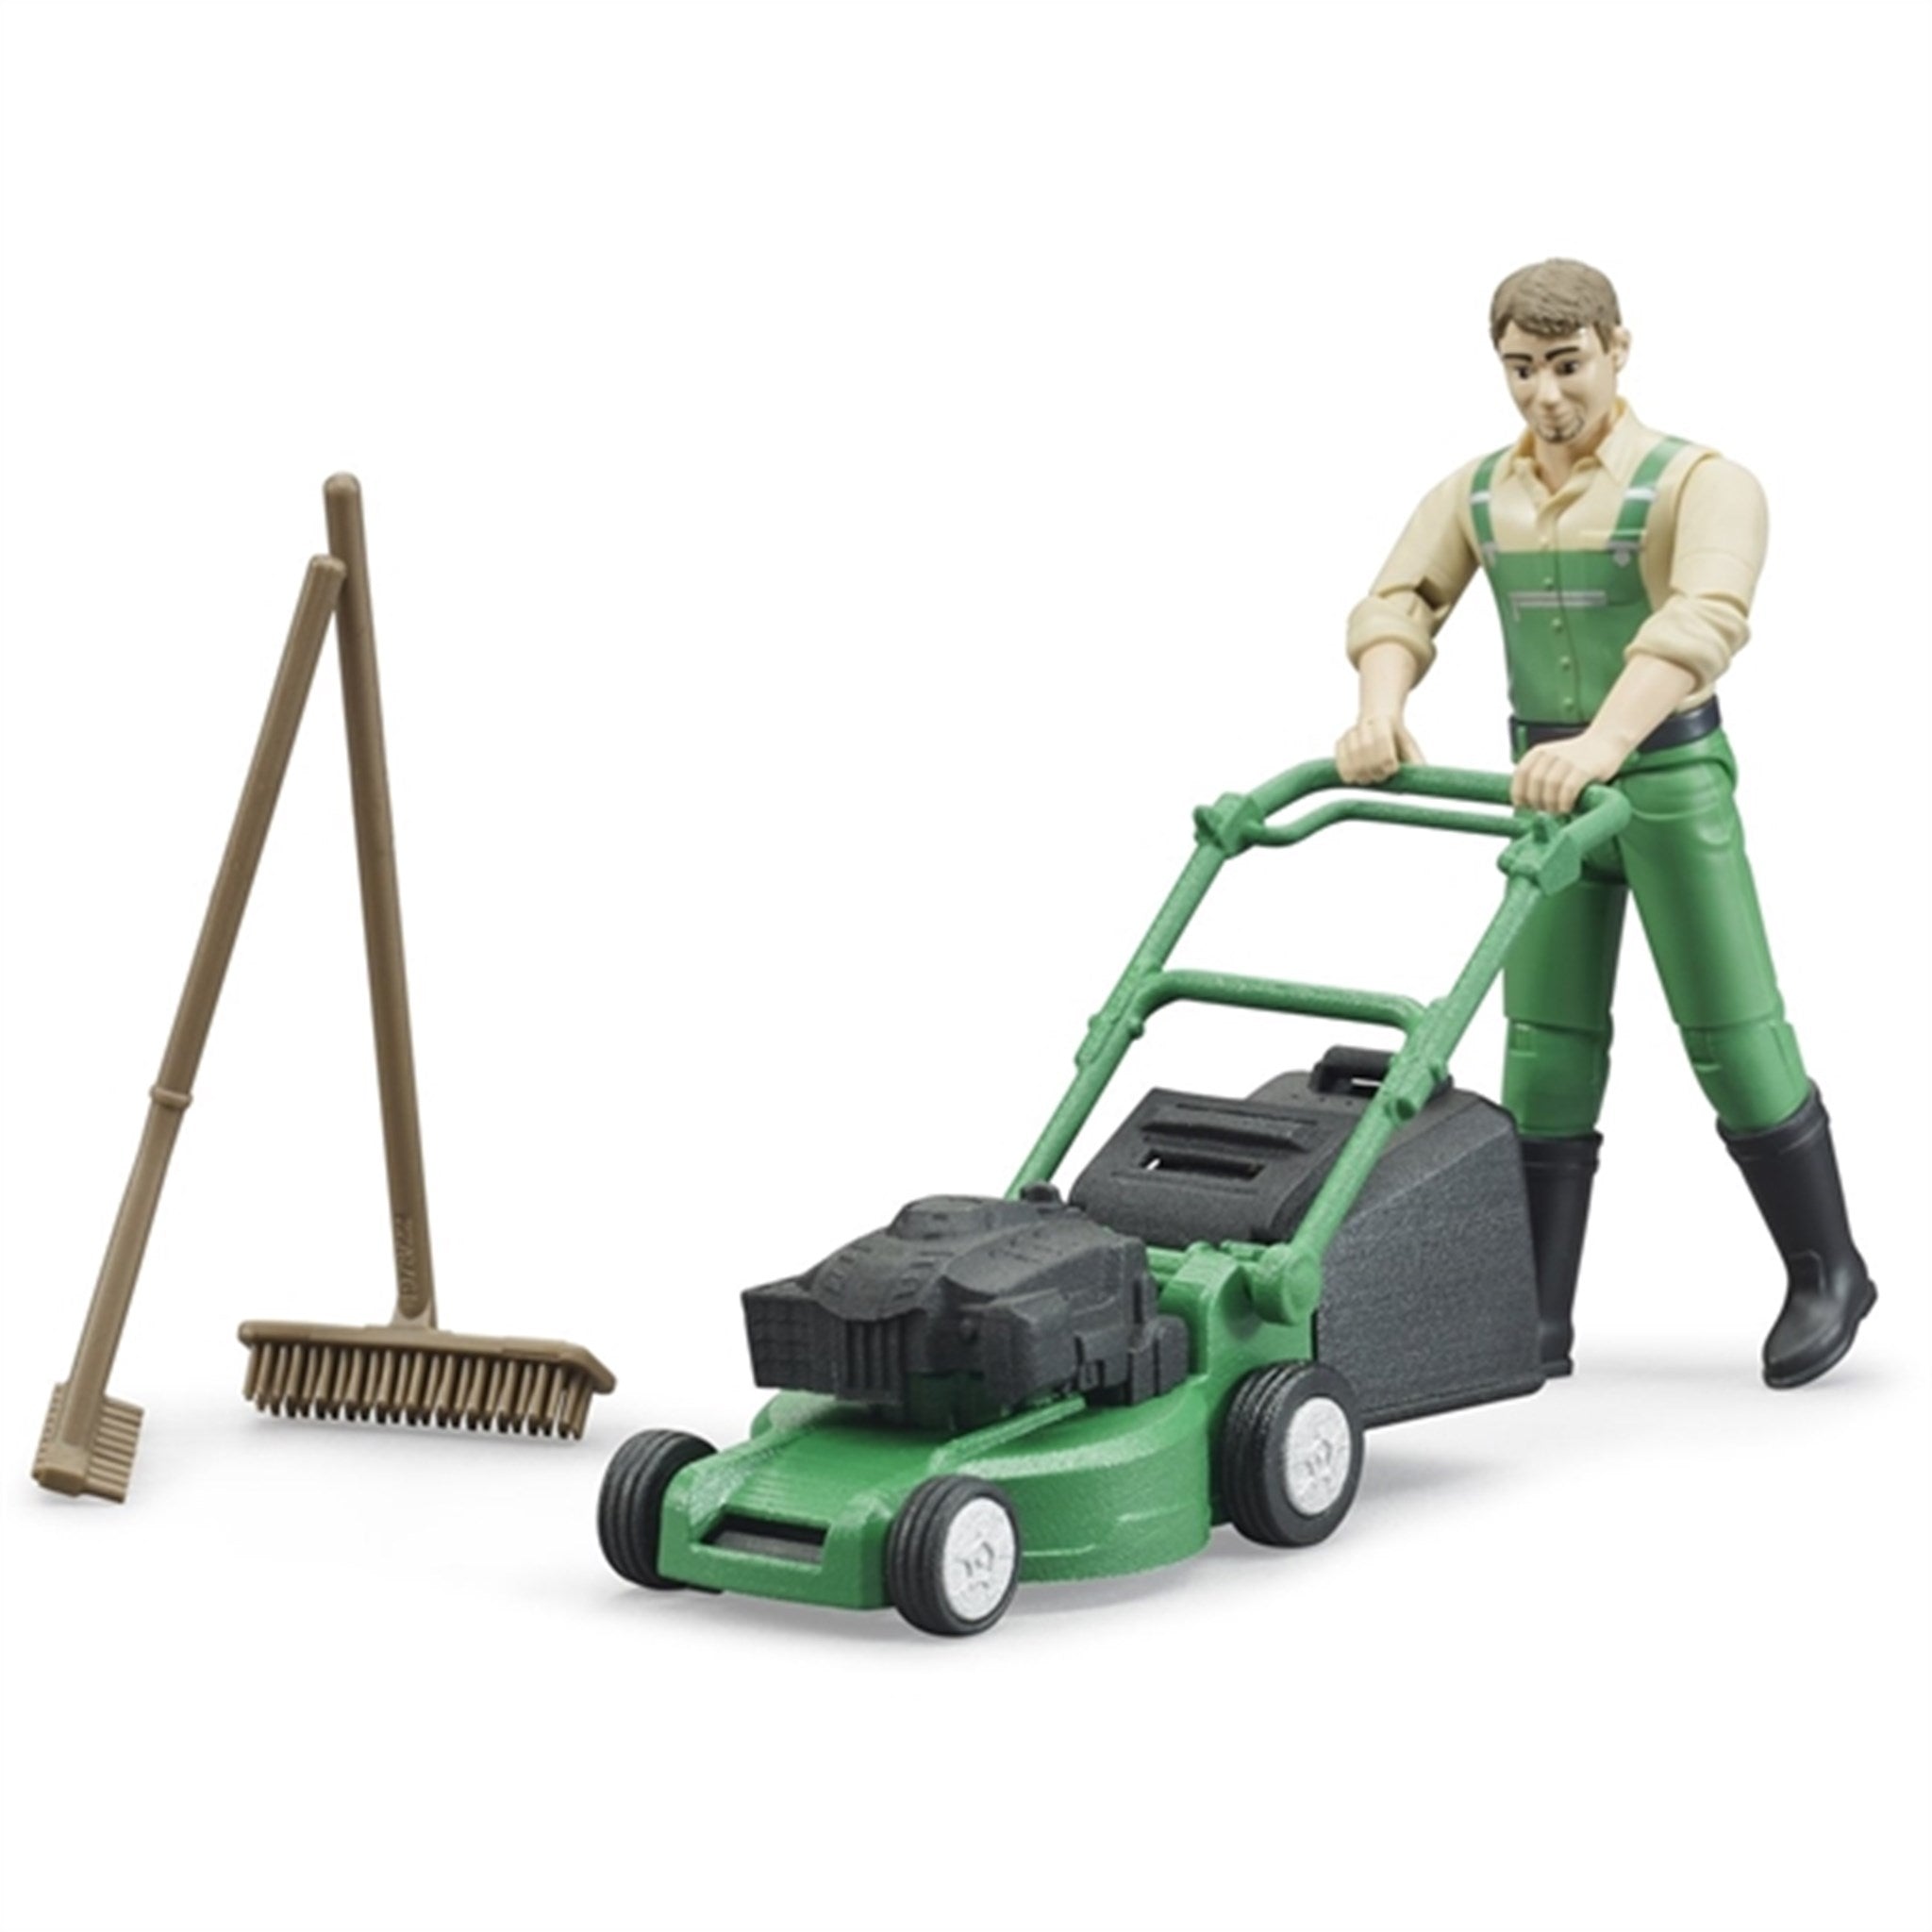 Bruder Bworld Gardener with Lawn Mower and Equipment 4